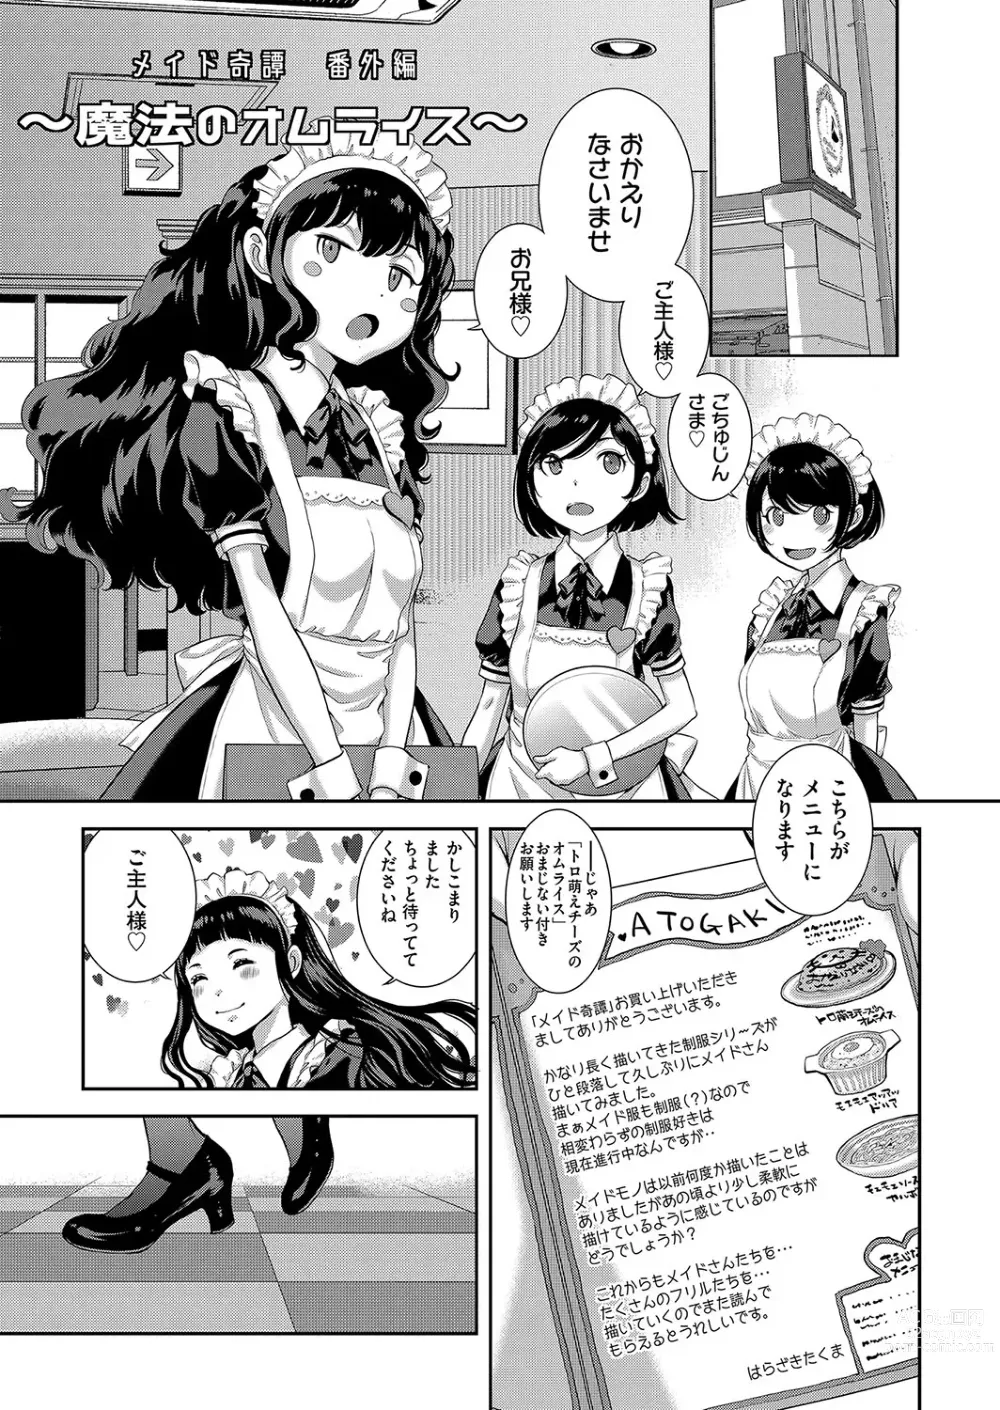 Page 204 of manga Maid Kitan - Maid Misteryous Story